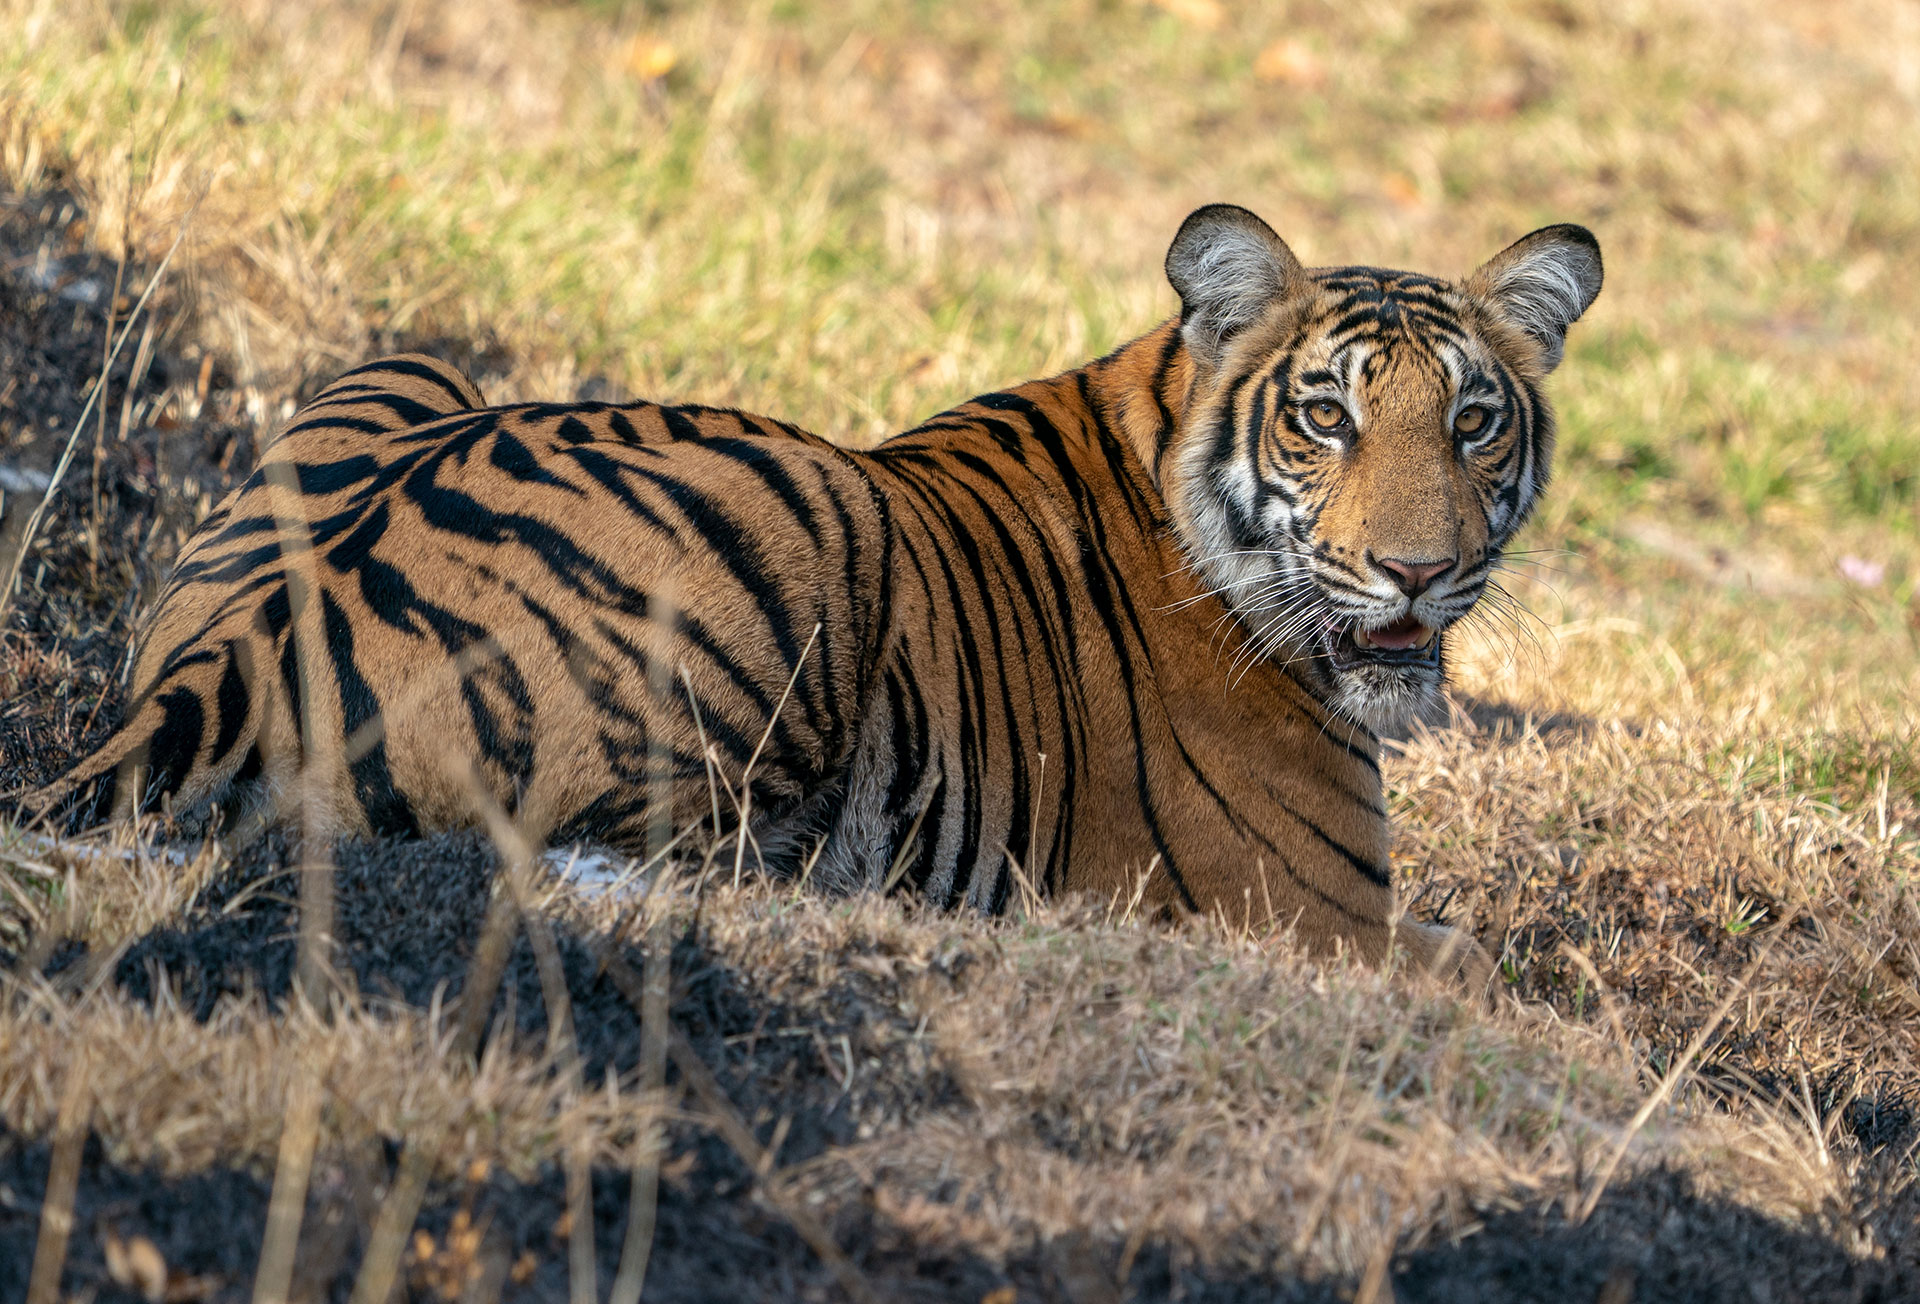 Tiger at Nagarhole National Park